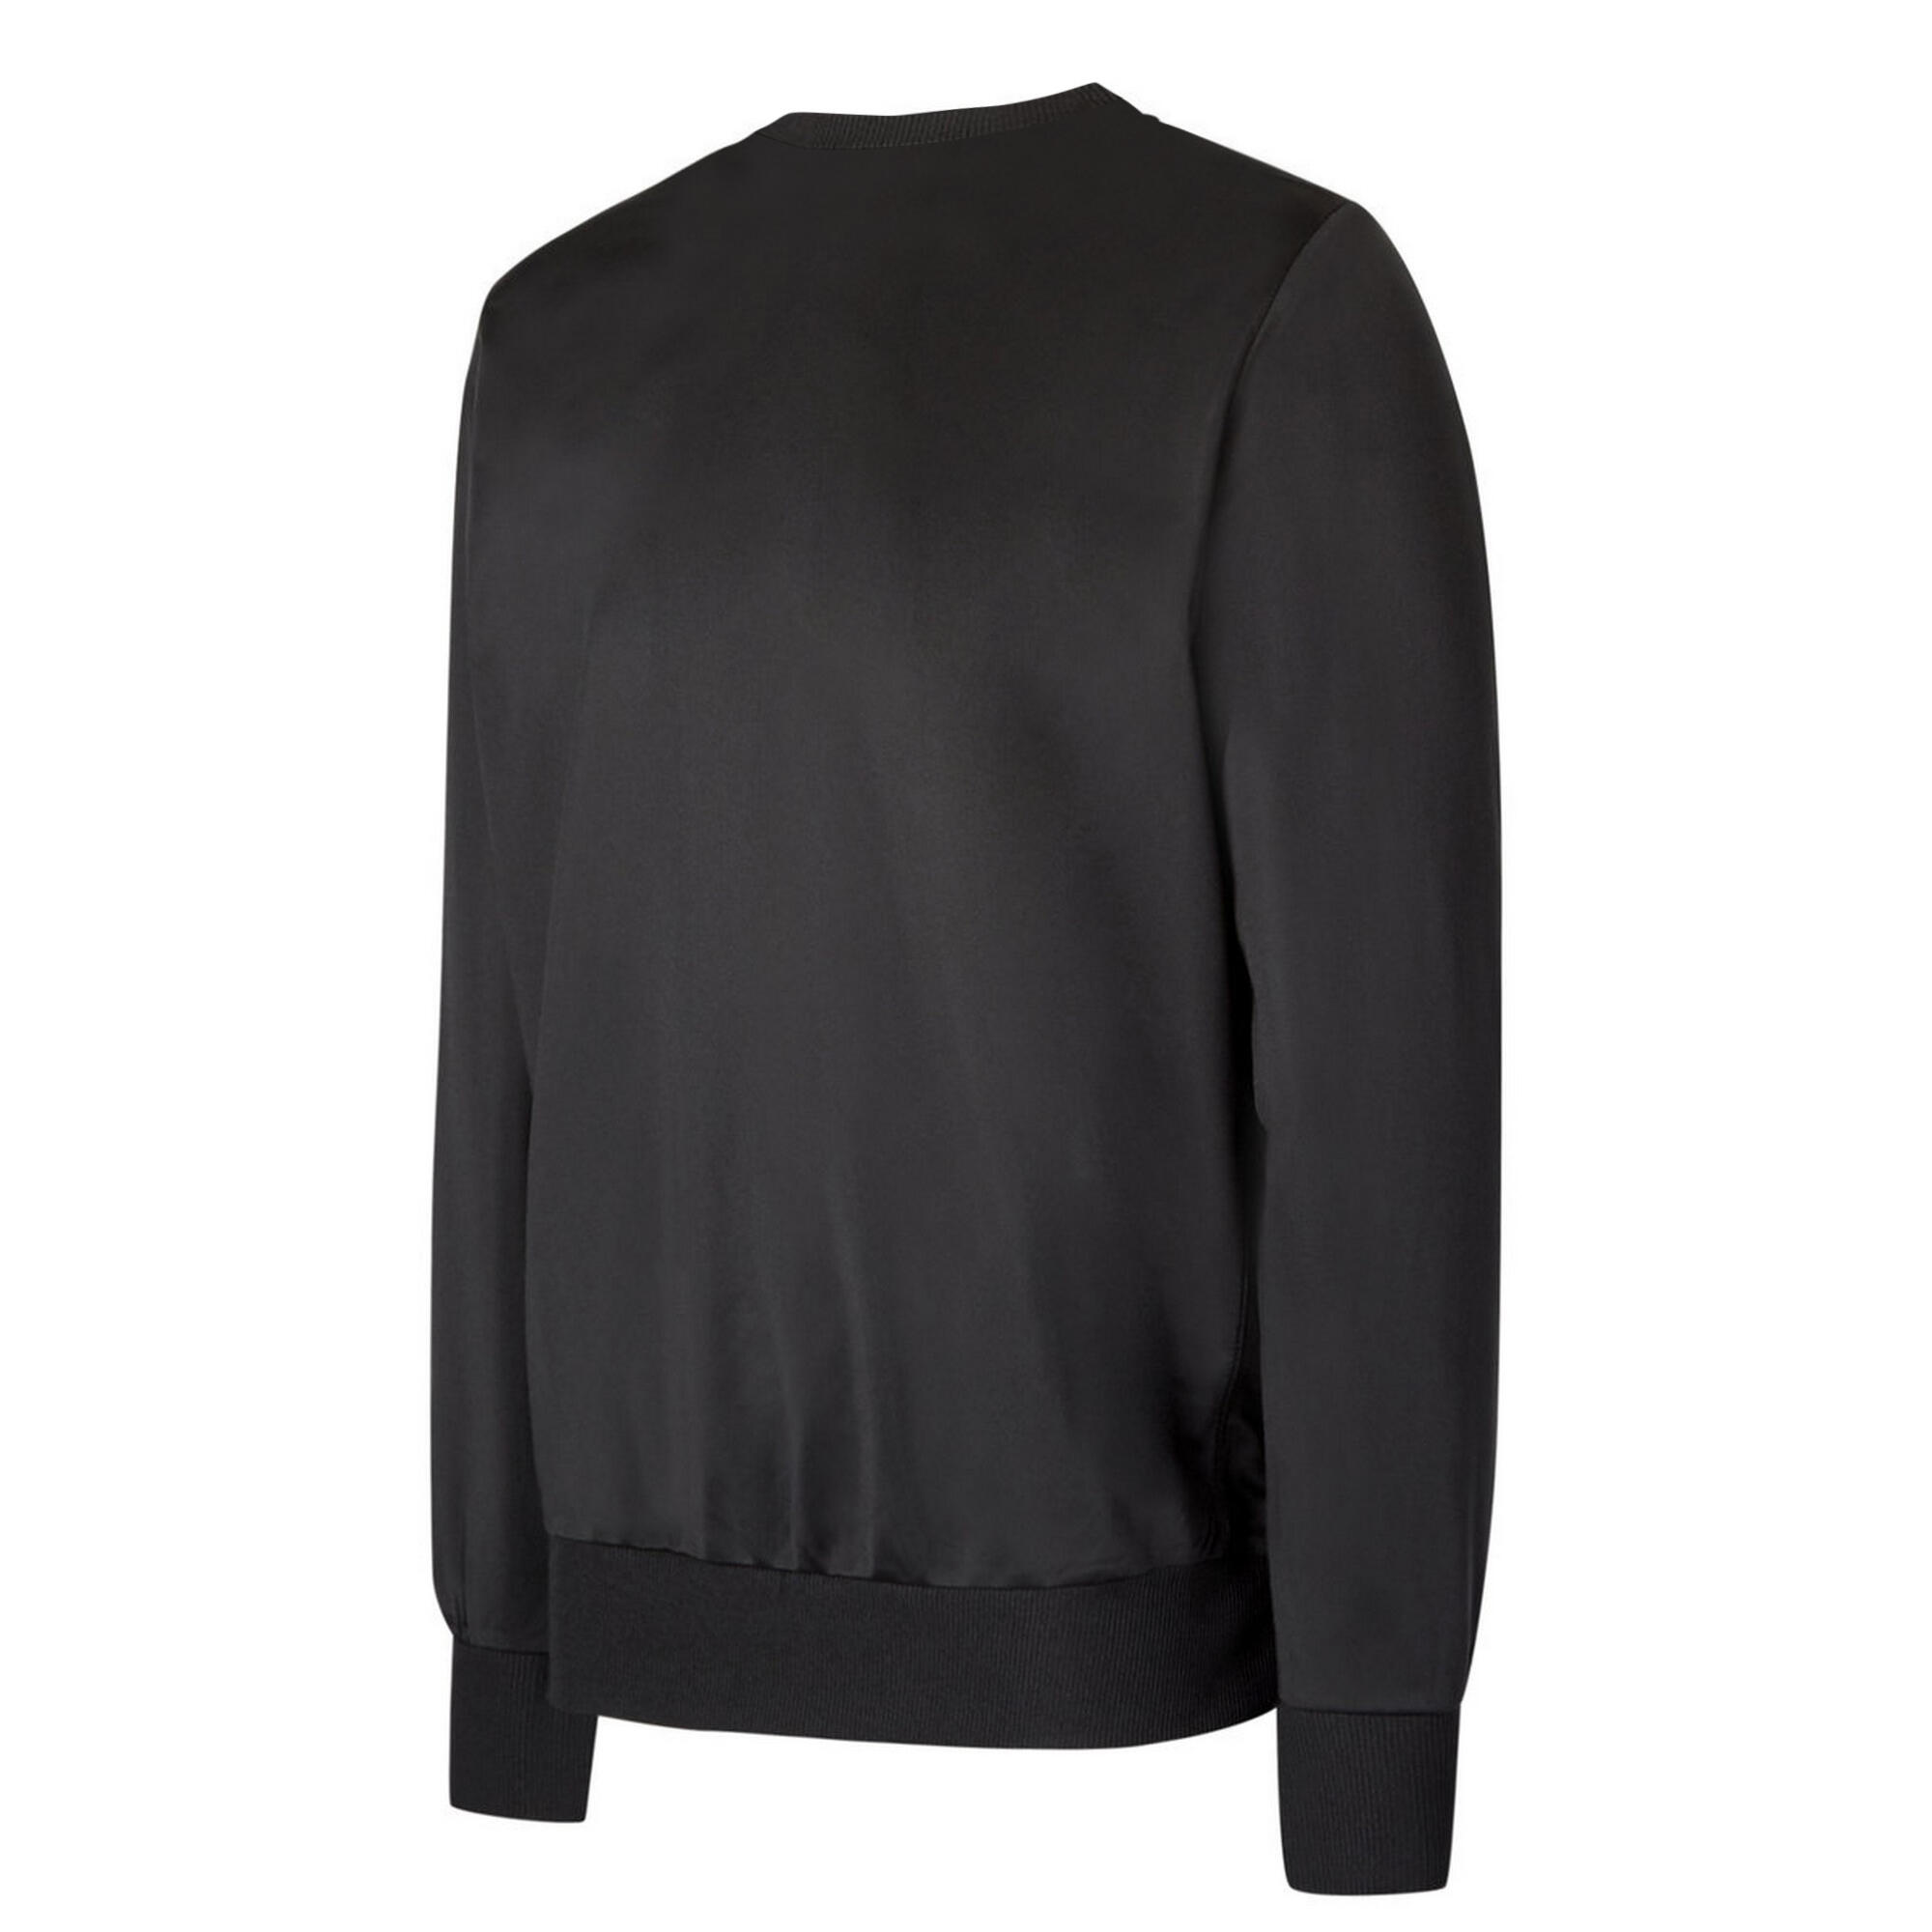 Childrens/Kids Polyester Sweatshirt (Black) 2/3